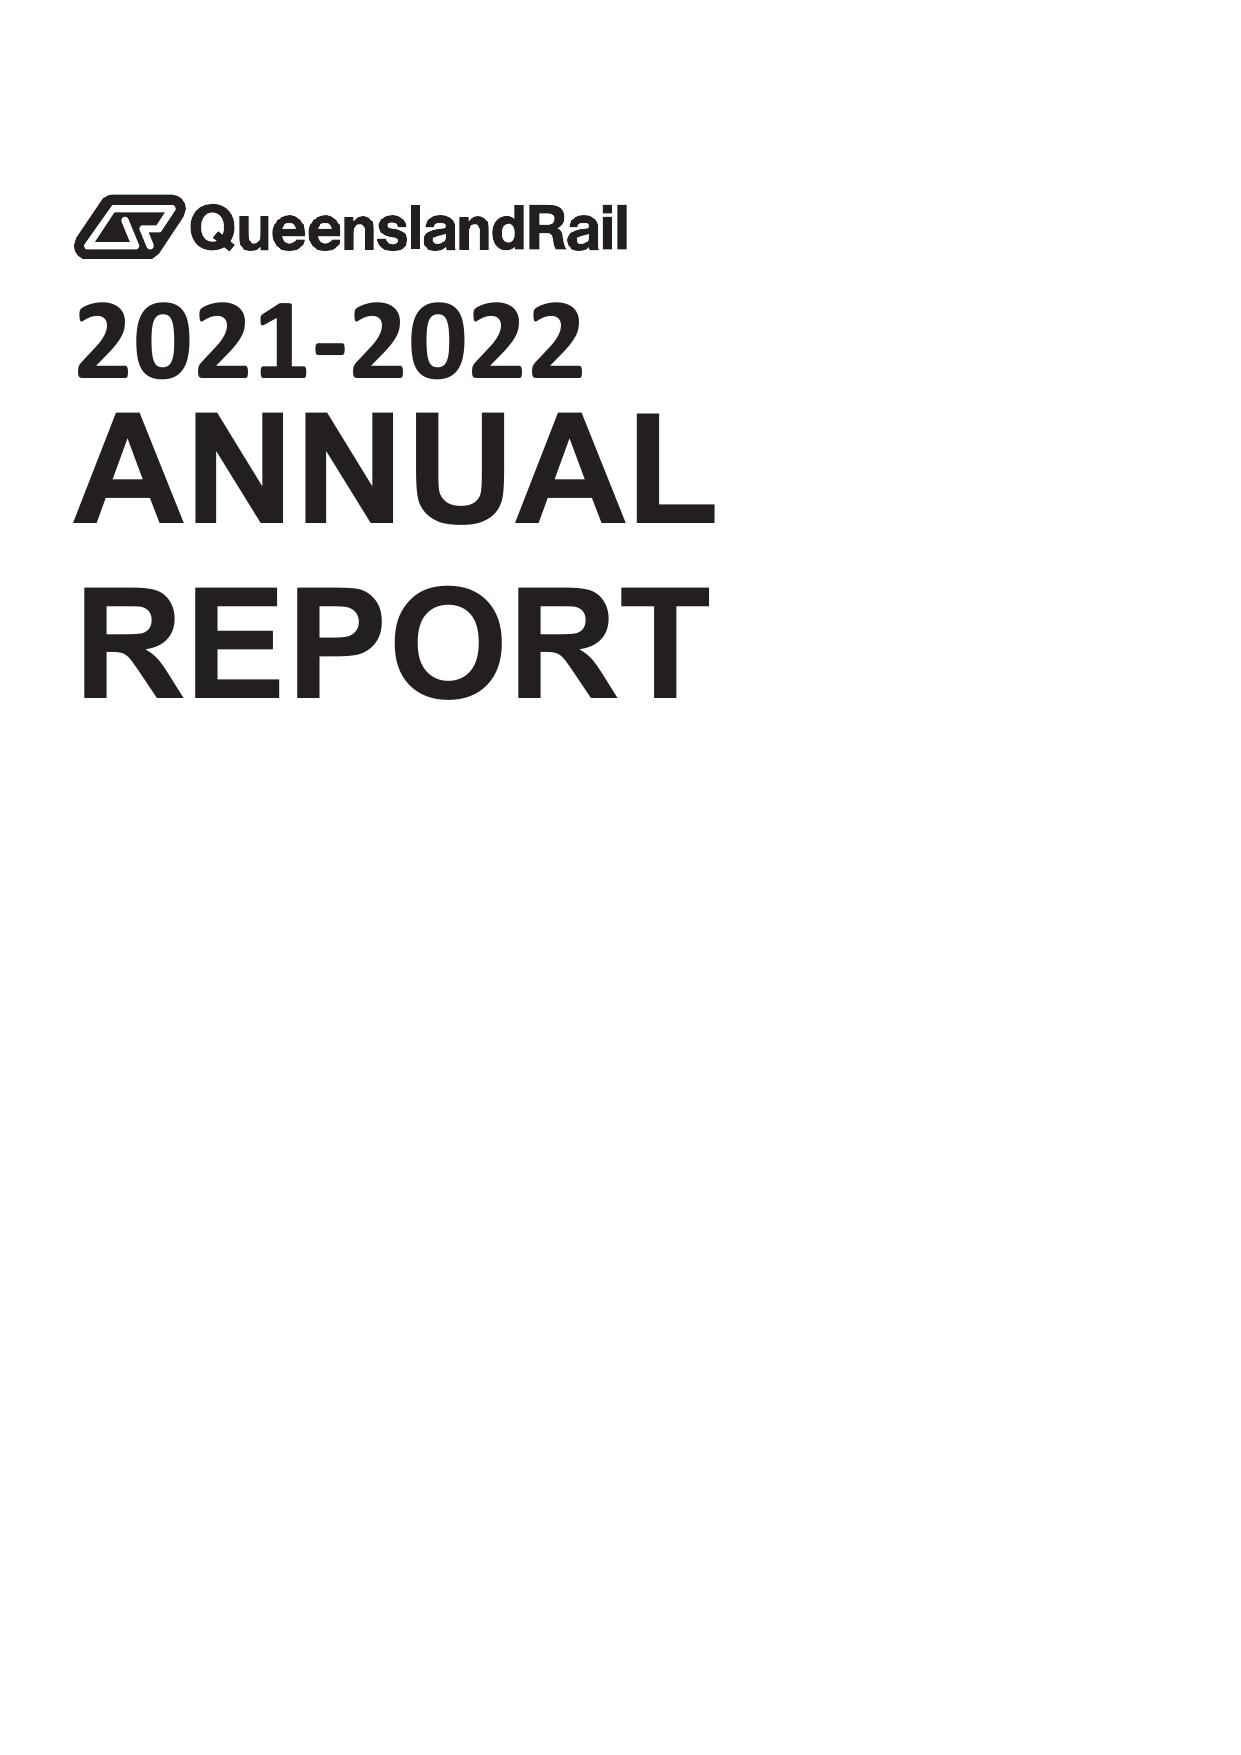 NPPA 2021 Annual Report